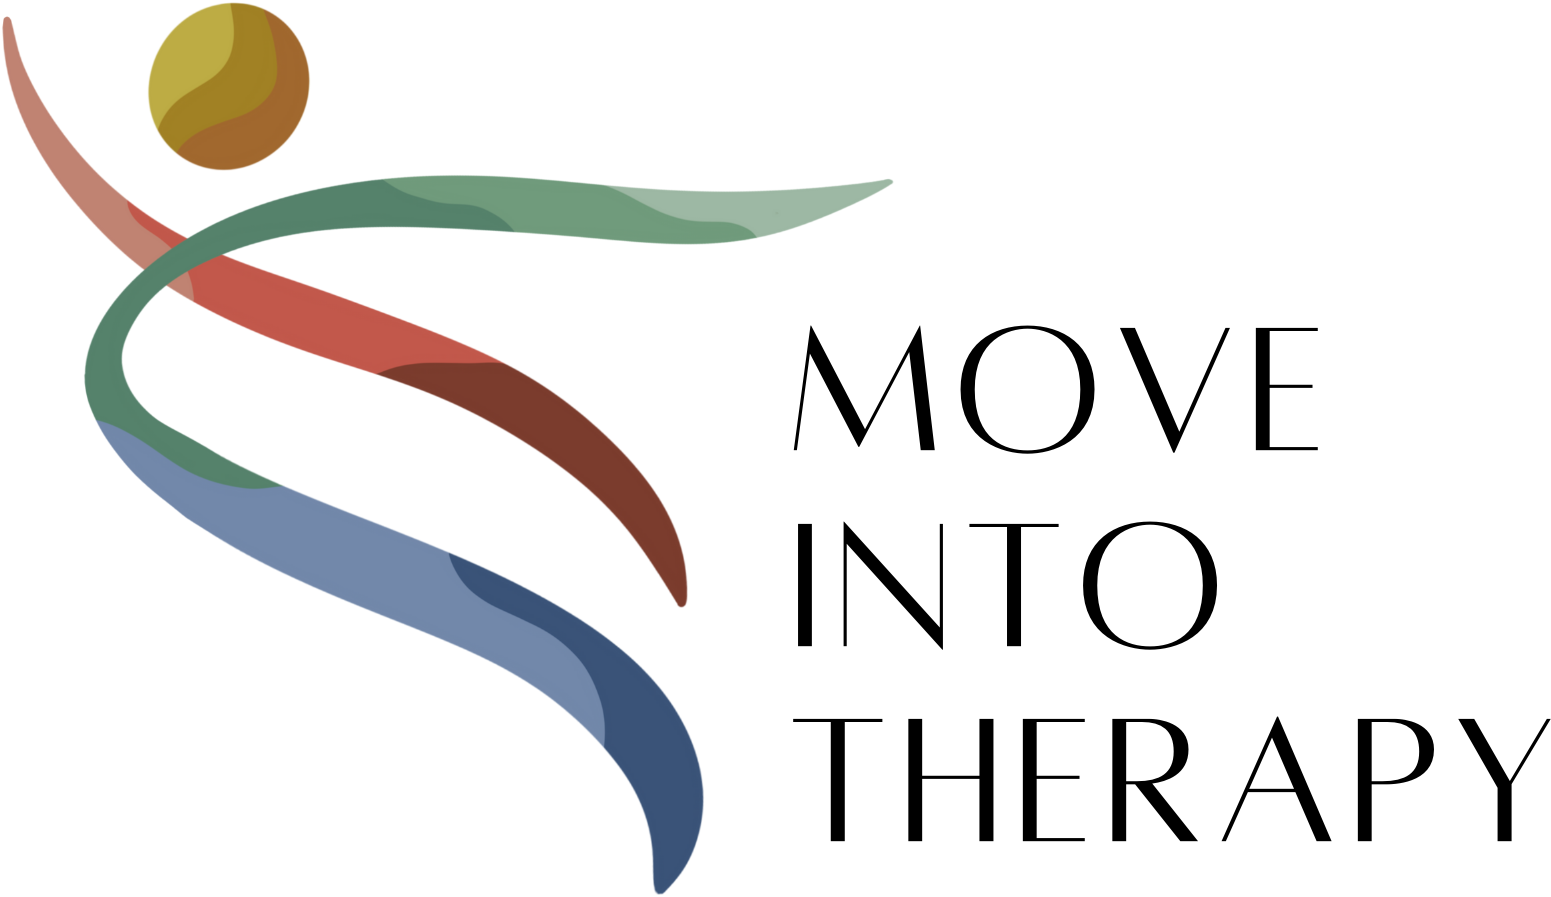 Move into therapy logo